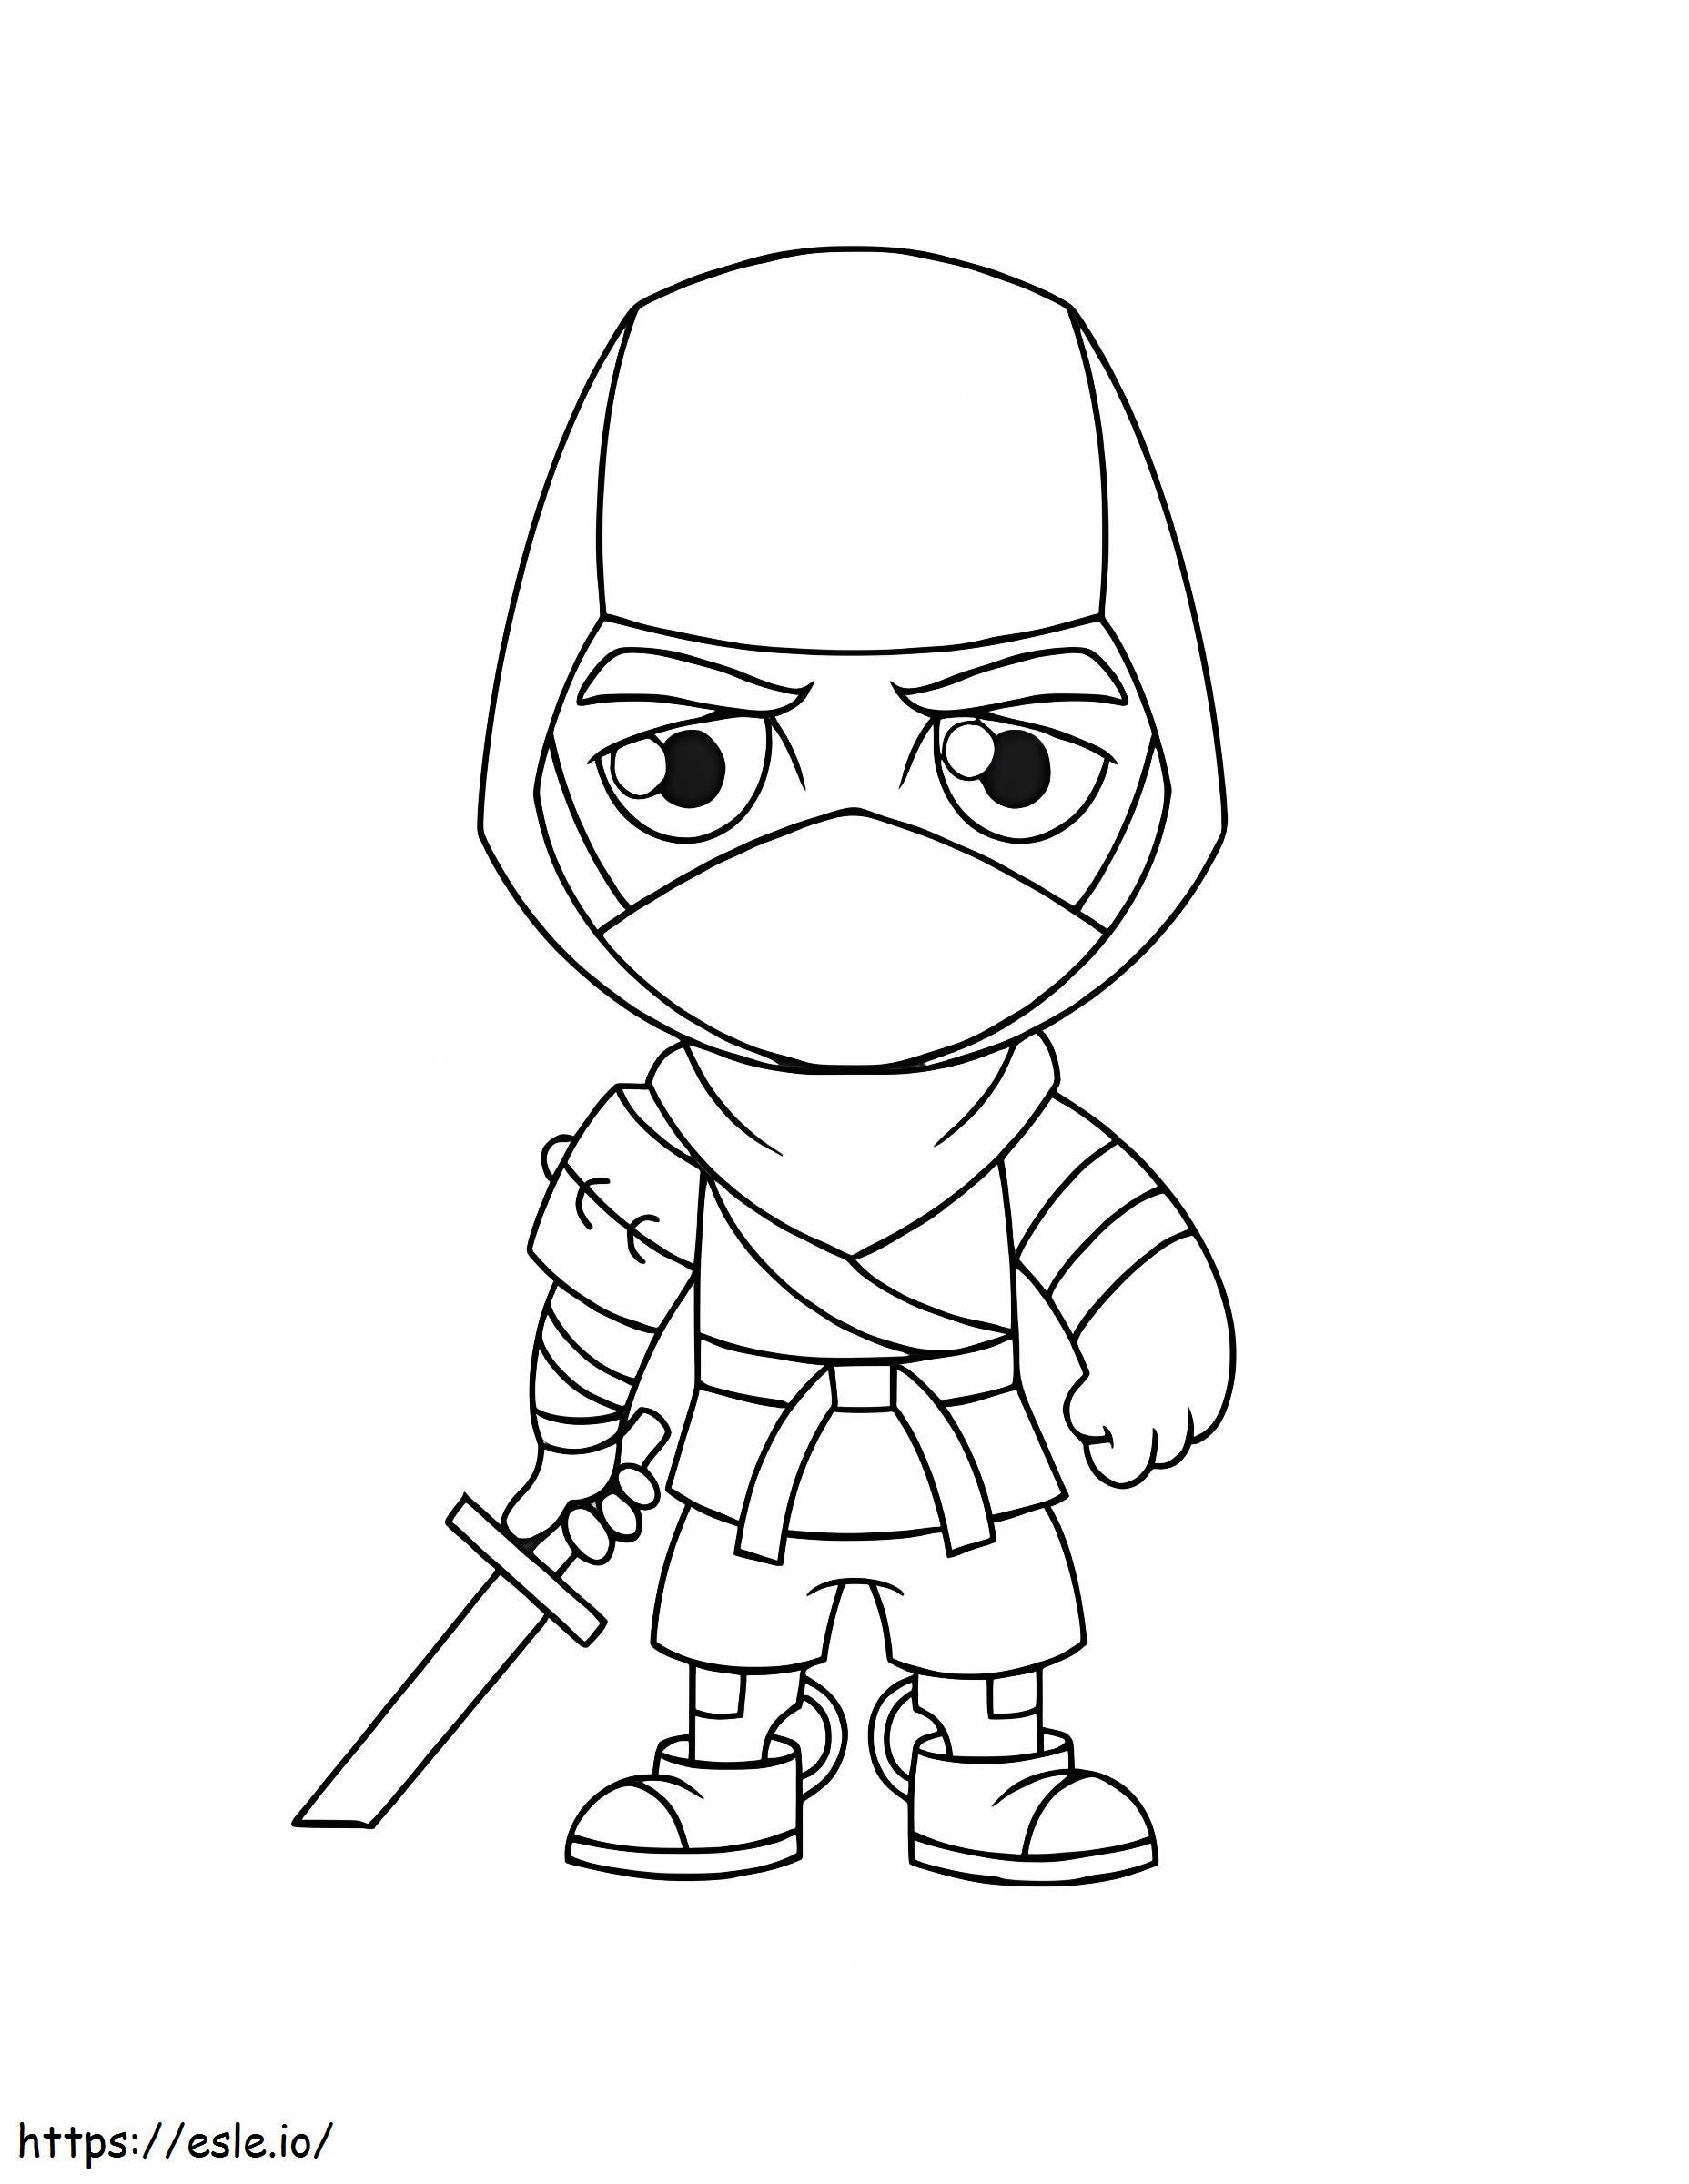 Ninja z Fortnite’a kolorowanka